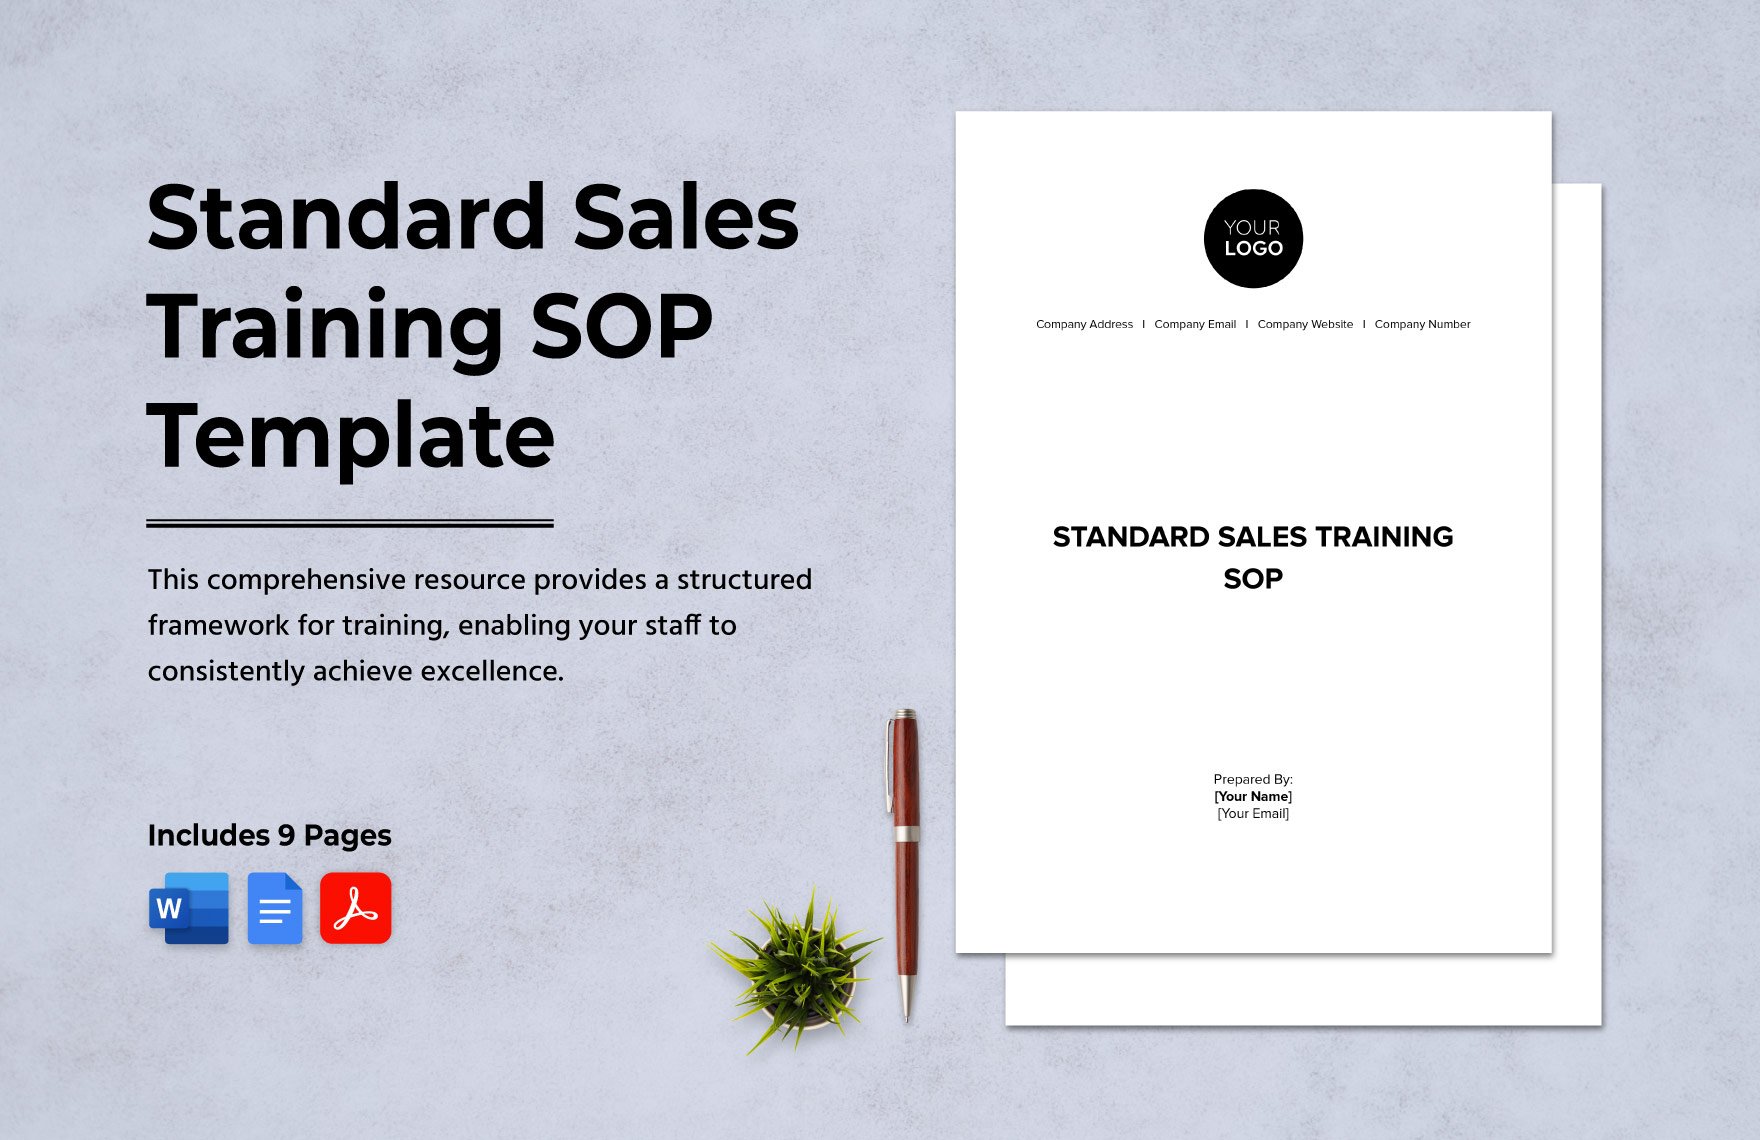 Standard Sales Training SOP Template